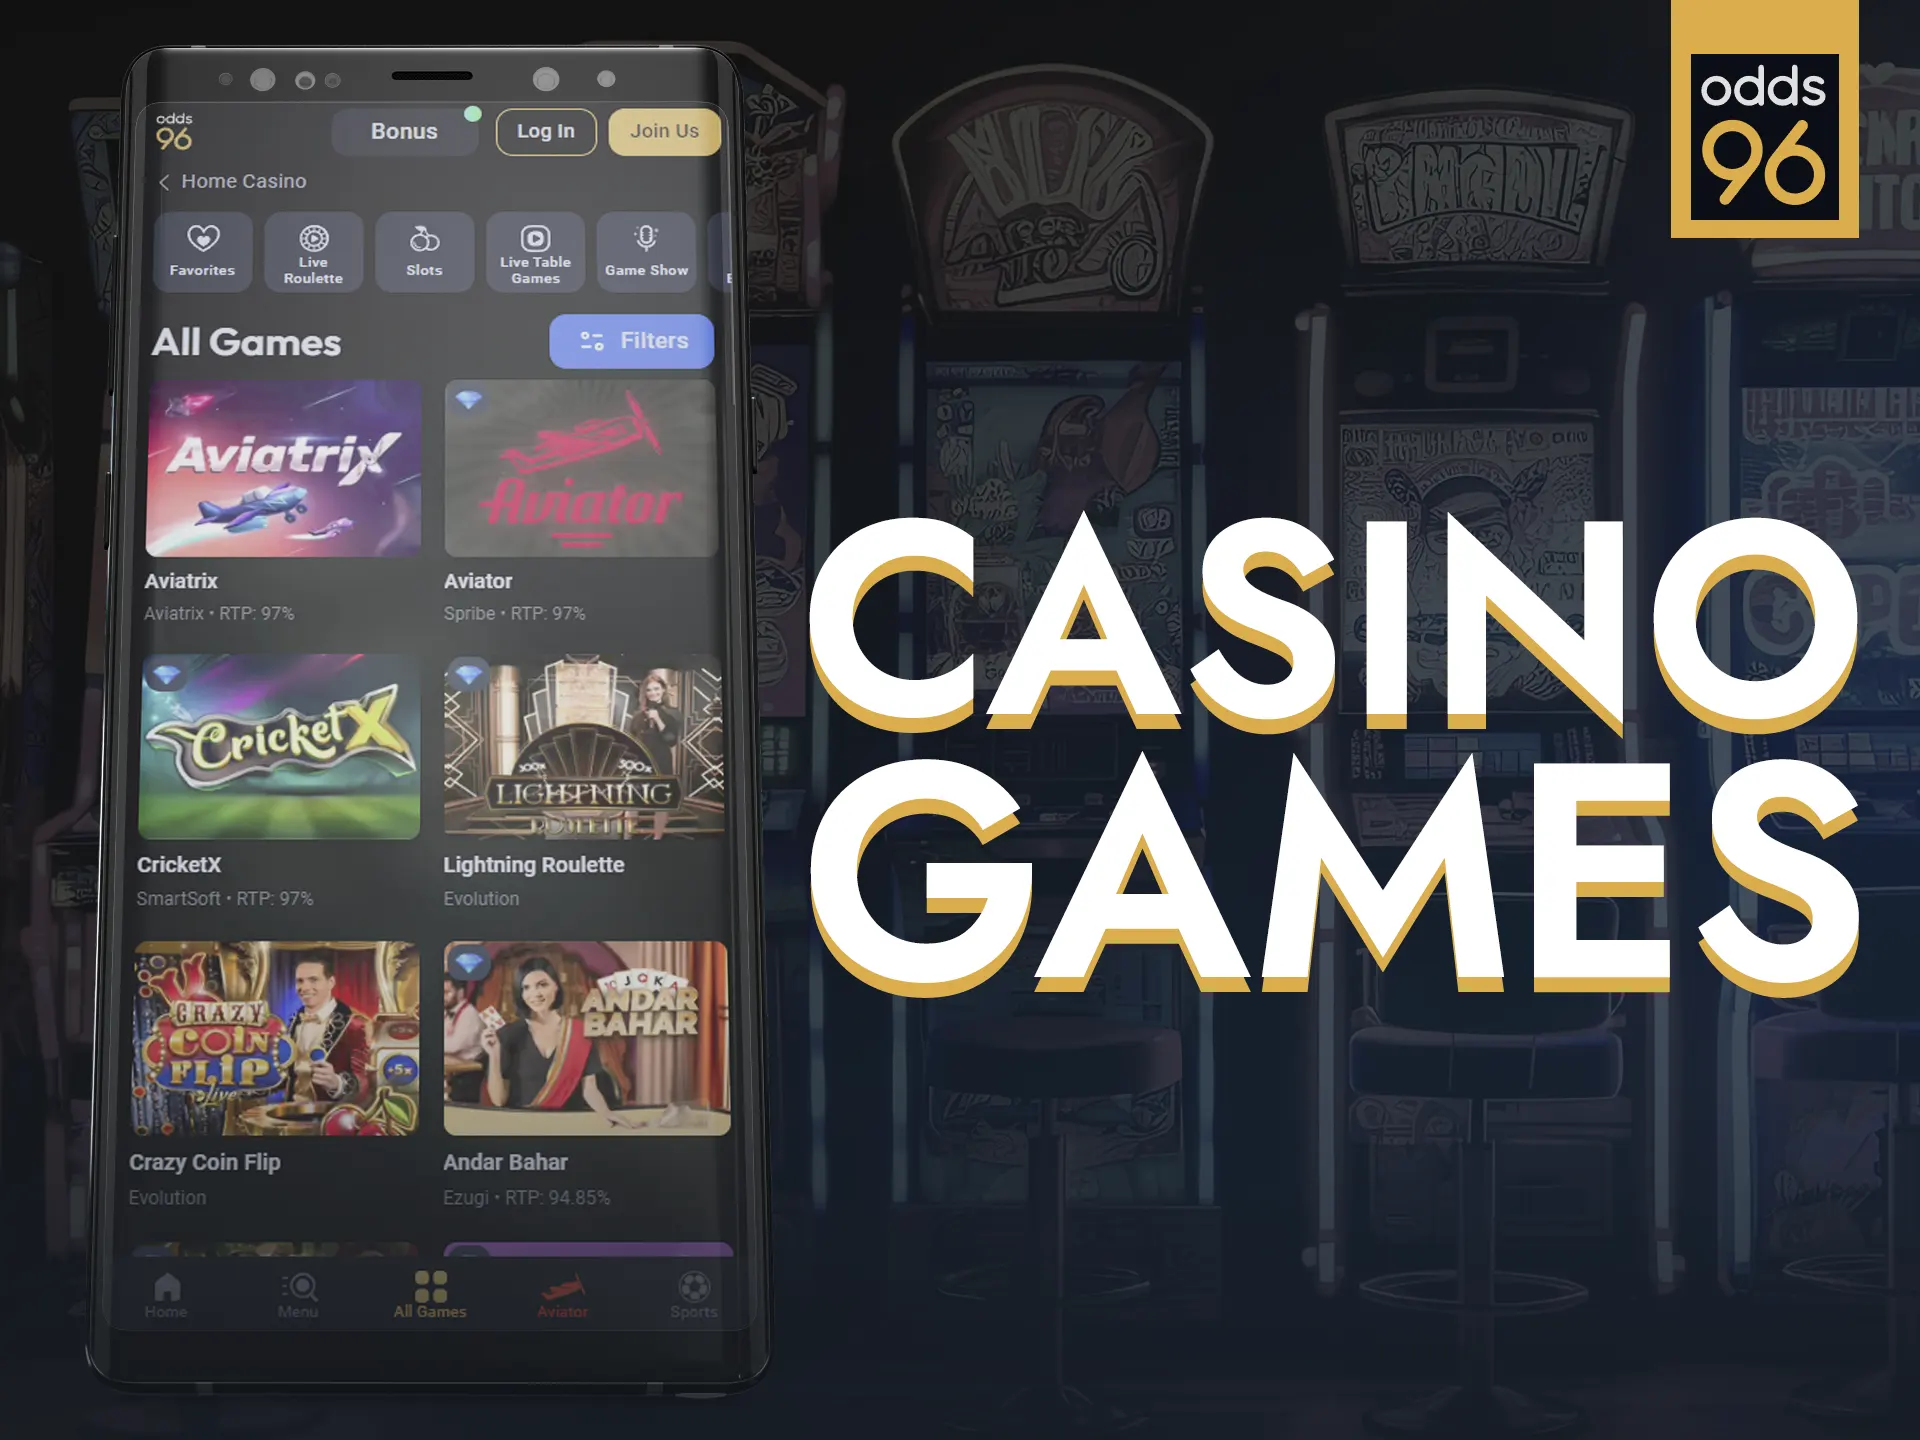 Explore various casino games on Odds96 app.